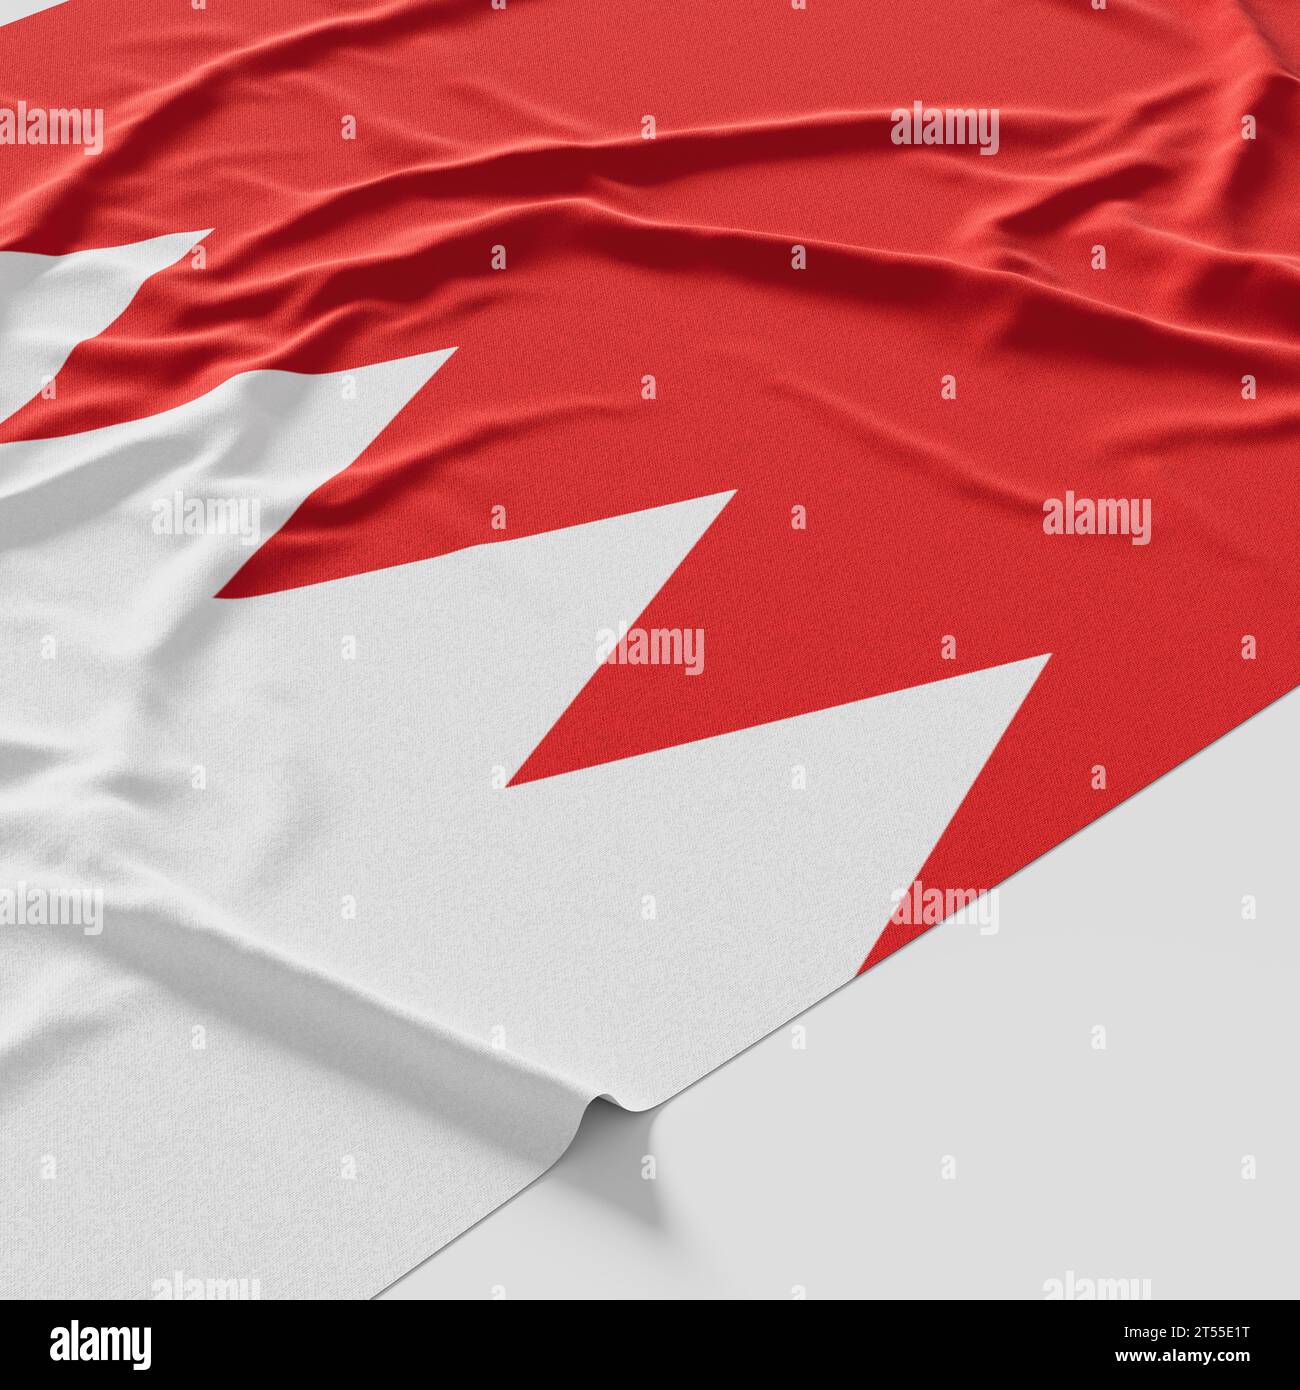 Flag of Bahrain. Fabric textured Bahrain flag isolated on white background. 3D illustration Stock Photo